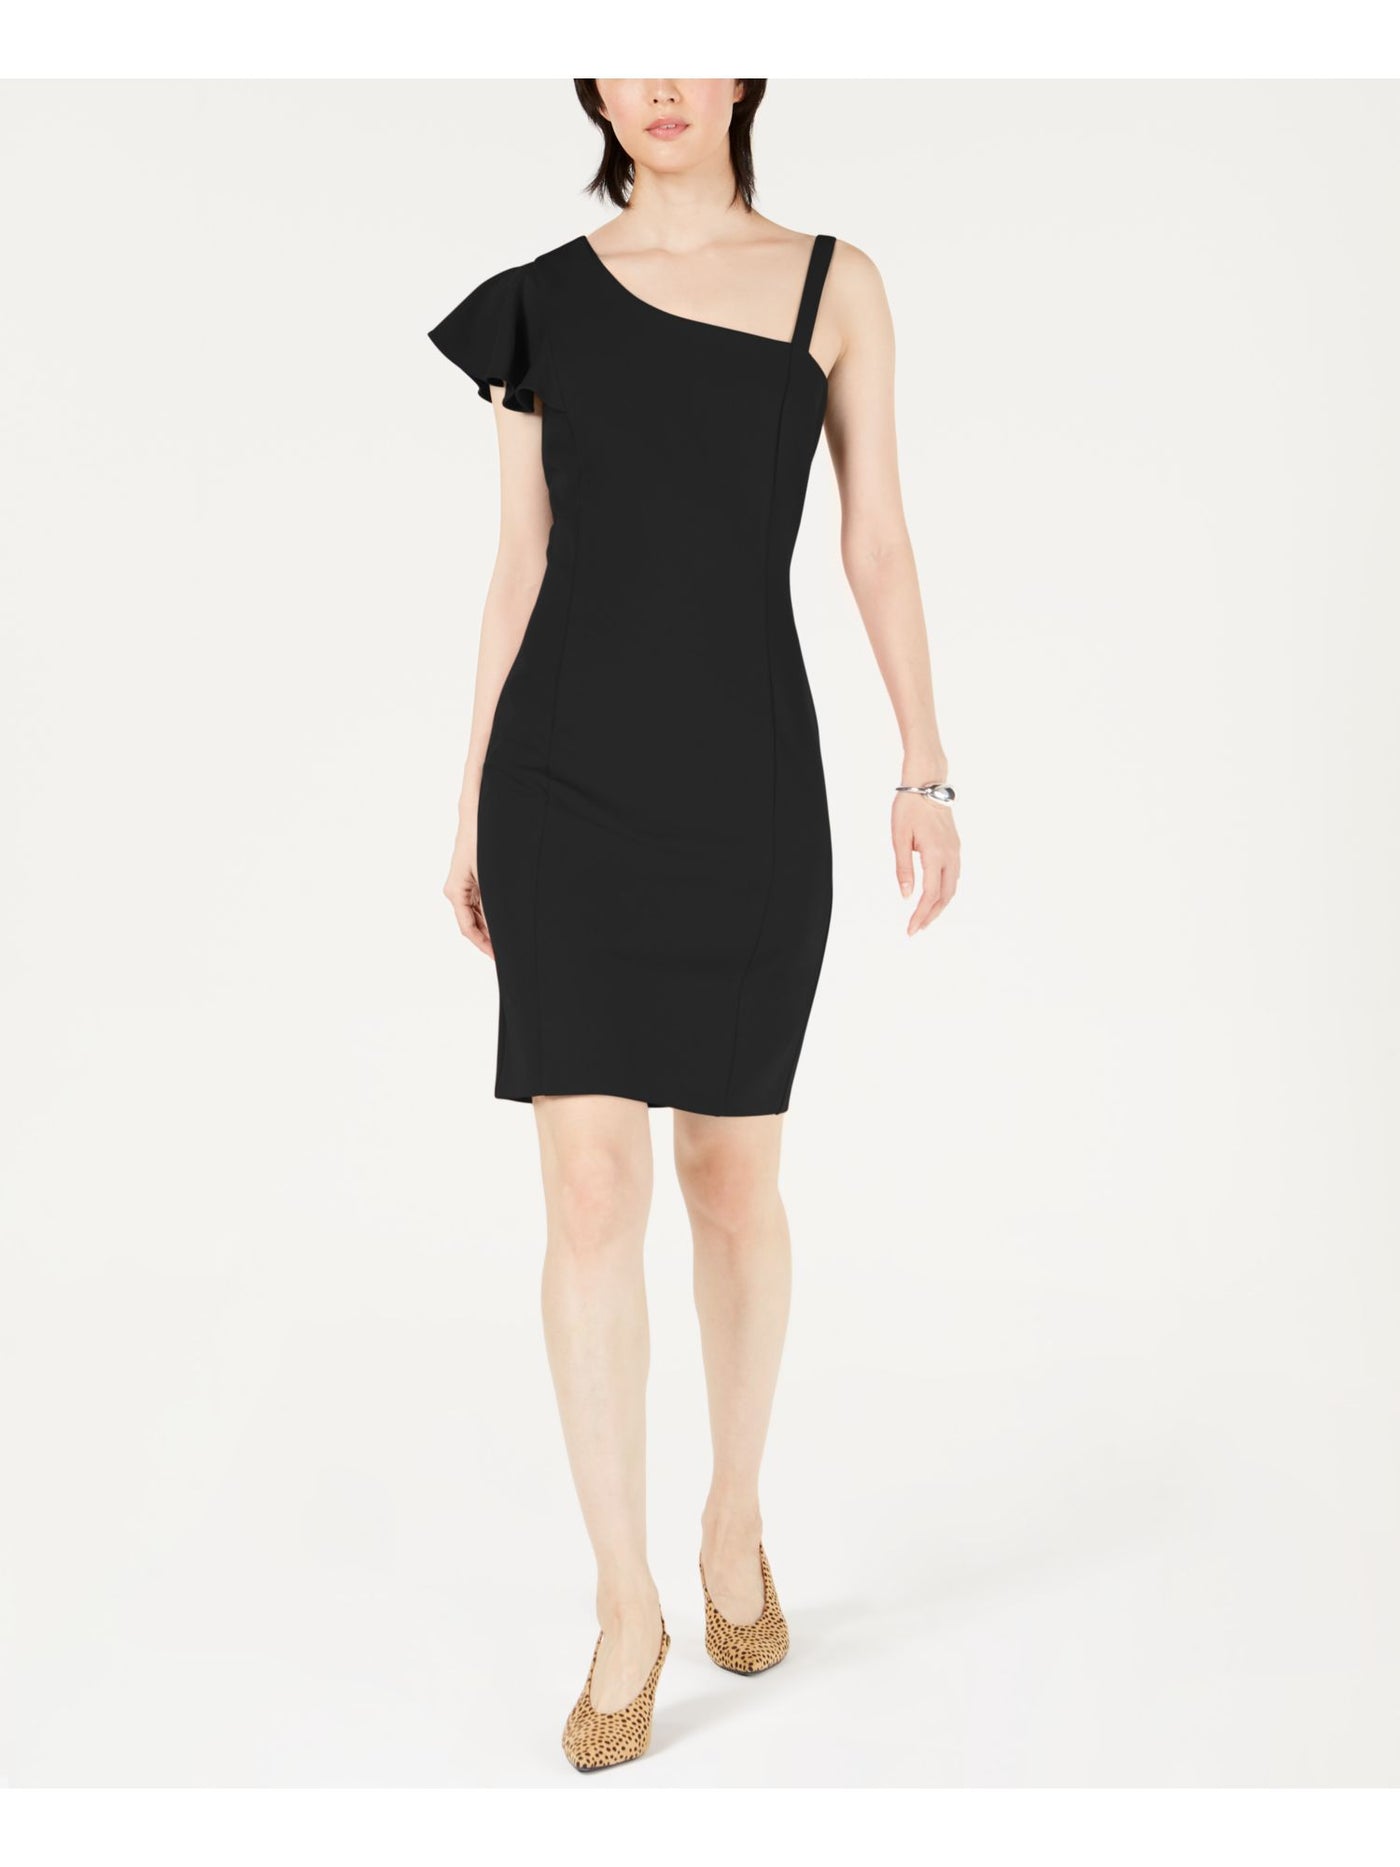 BAR III Womens Black Asymmetrical Ruffle Asymmetrical Neckline Above The Knee Cocktail Body Con Dress L